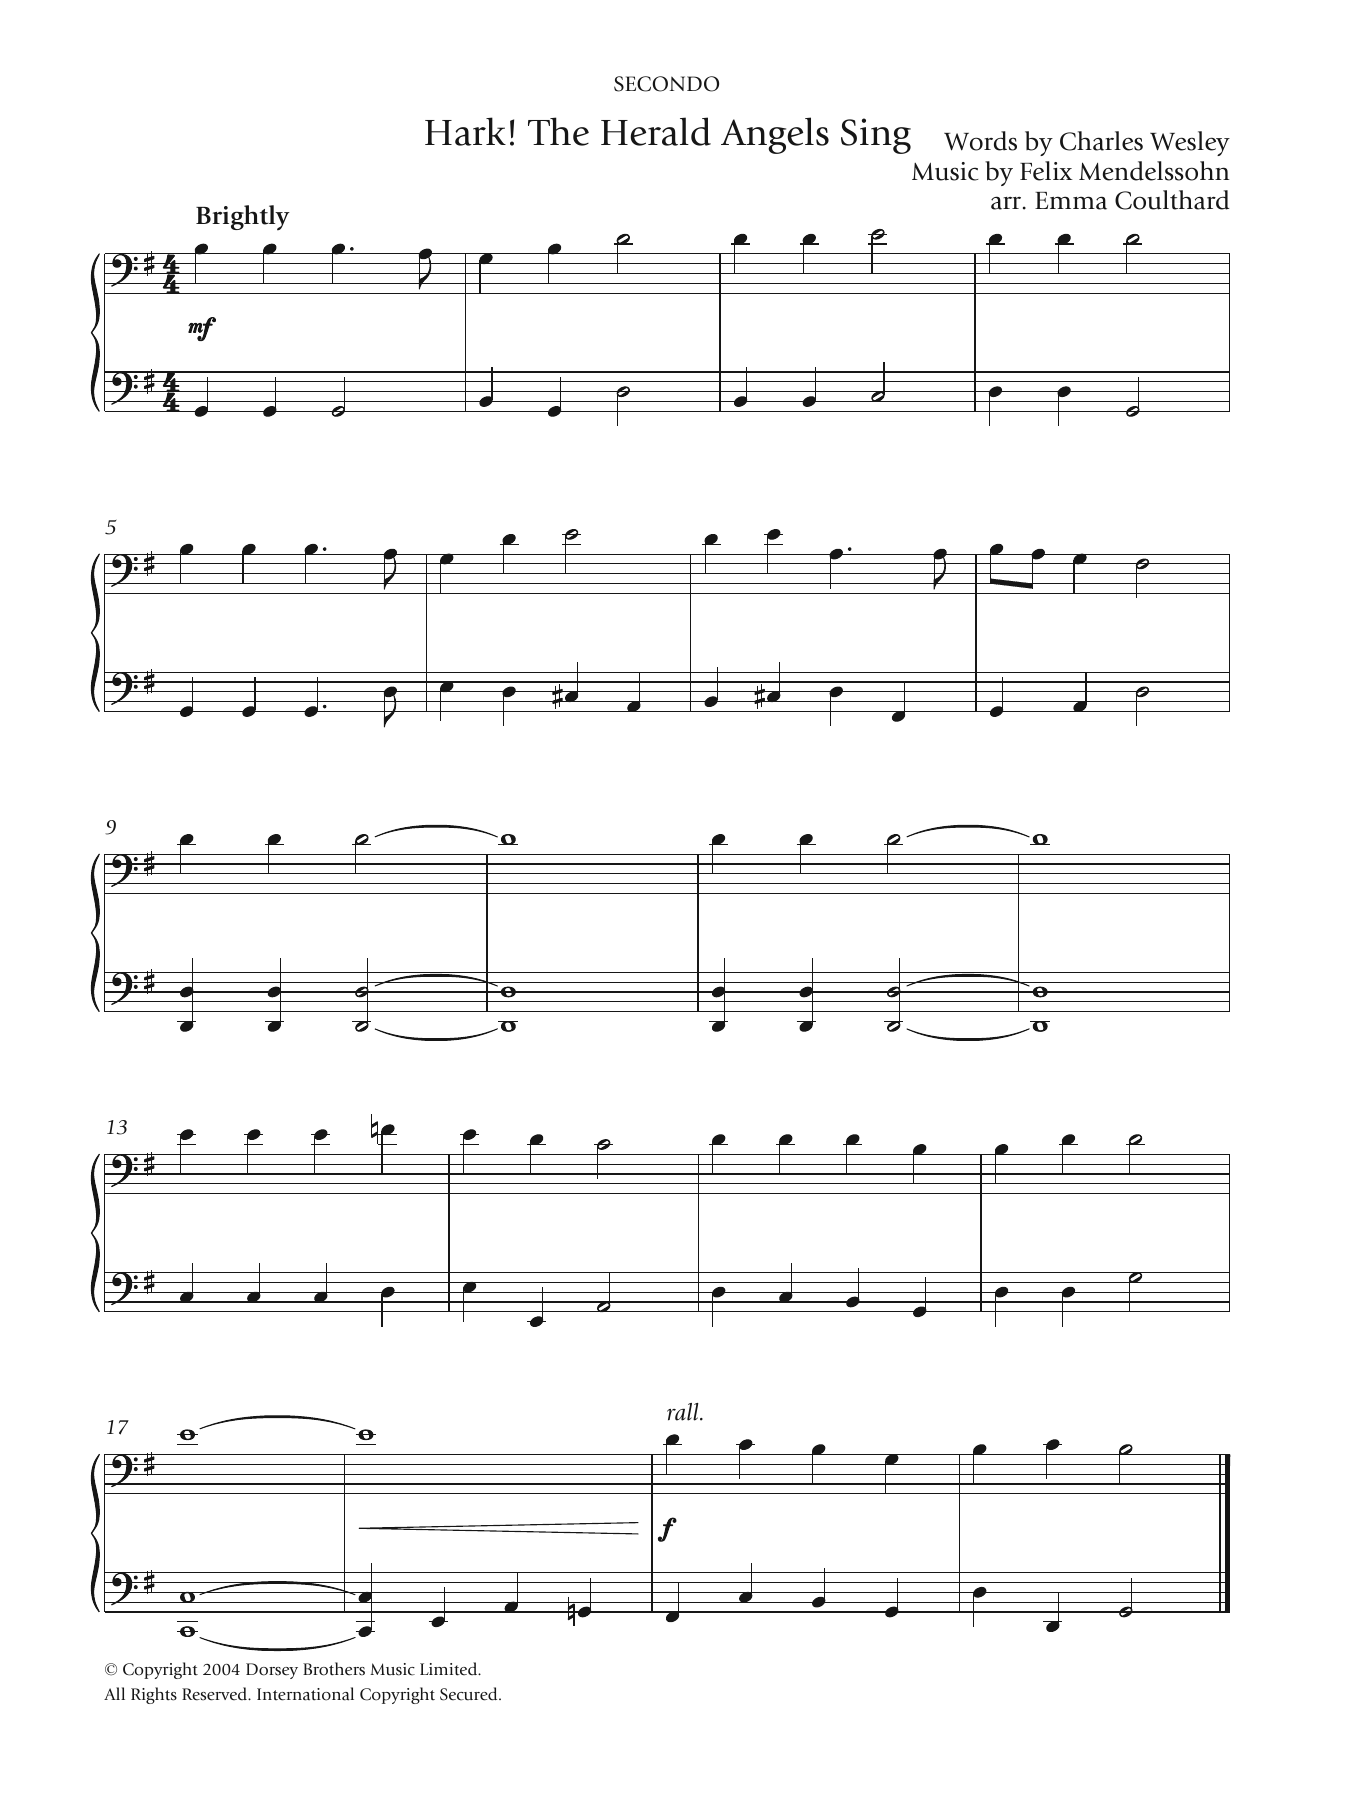 Christmas Carol Hark! The Herald Angels Sing Sheet Music Notes & Chords for Lyrics & Chords - Download or Print PDF